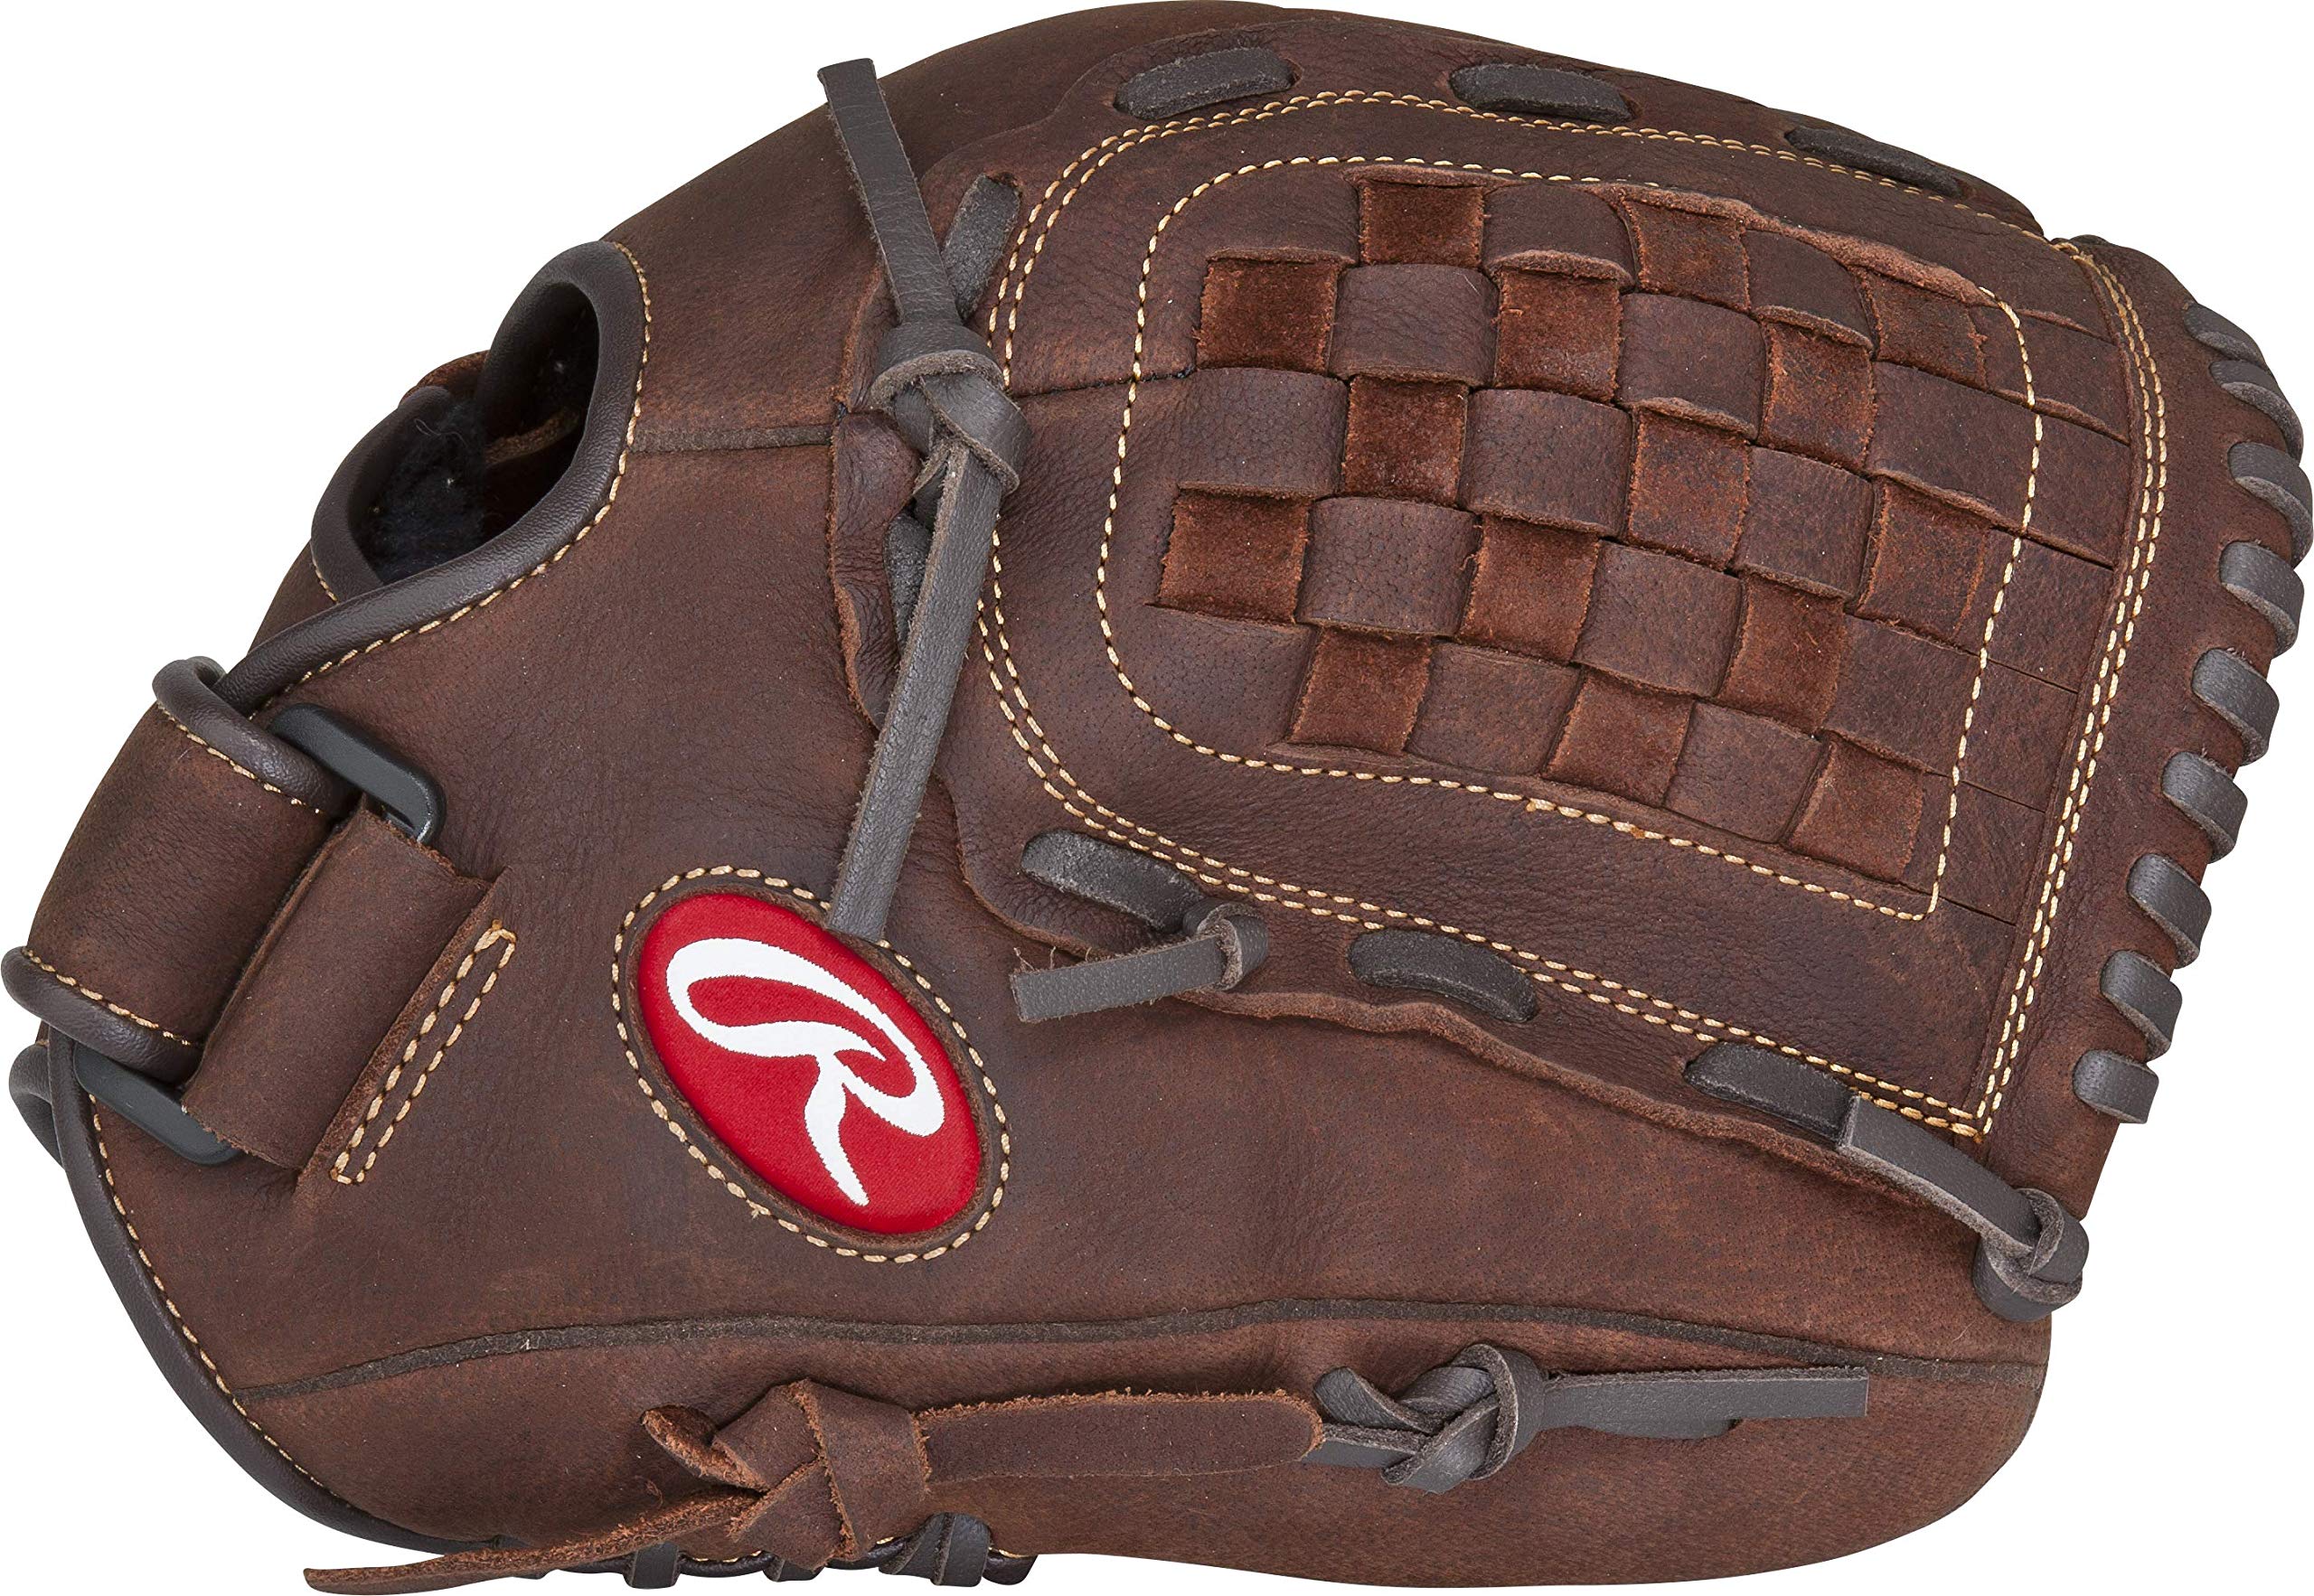 Rawlings | Player Preferred Glove Series | Baseball/Slo...